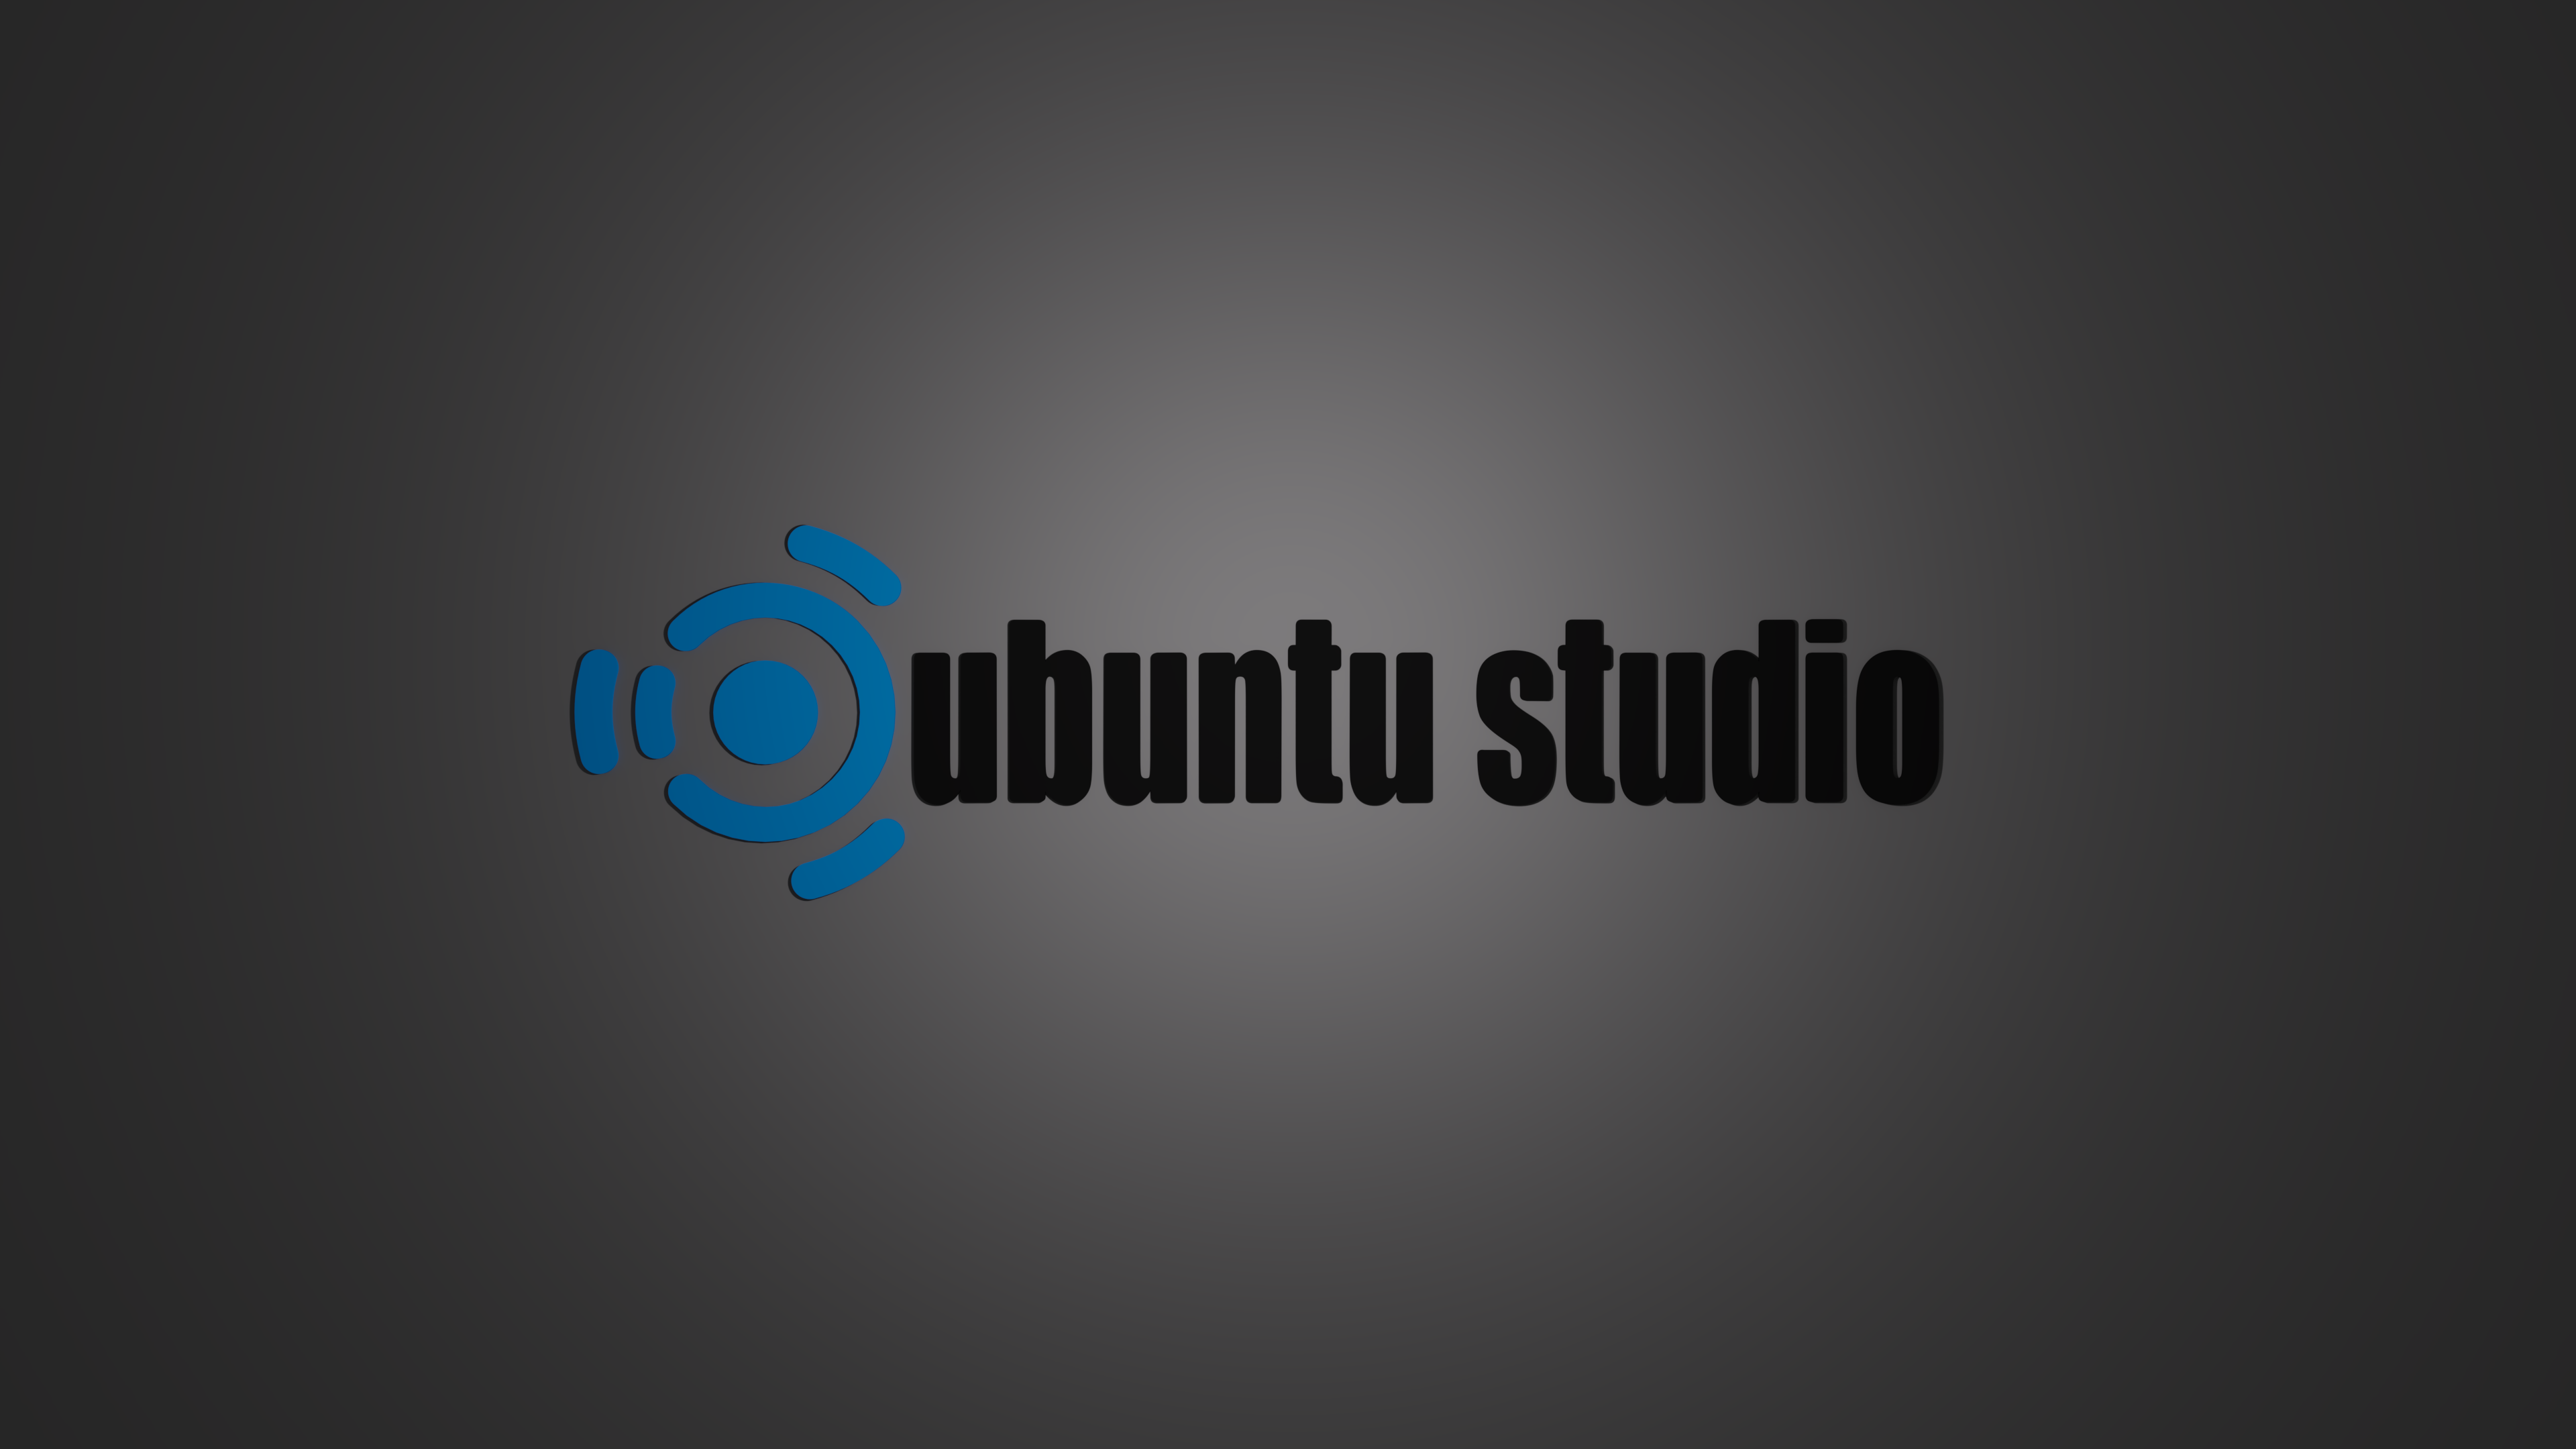 Ubuntu Studio Wallpaper Logo - Imgur.png